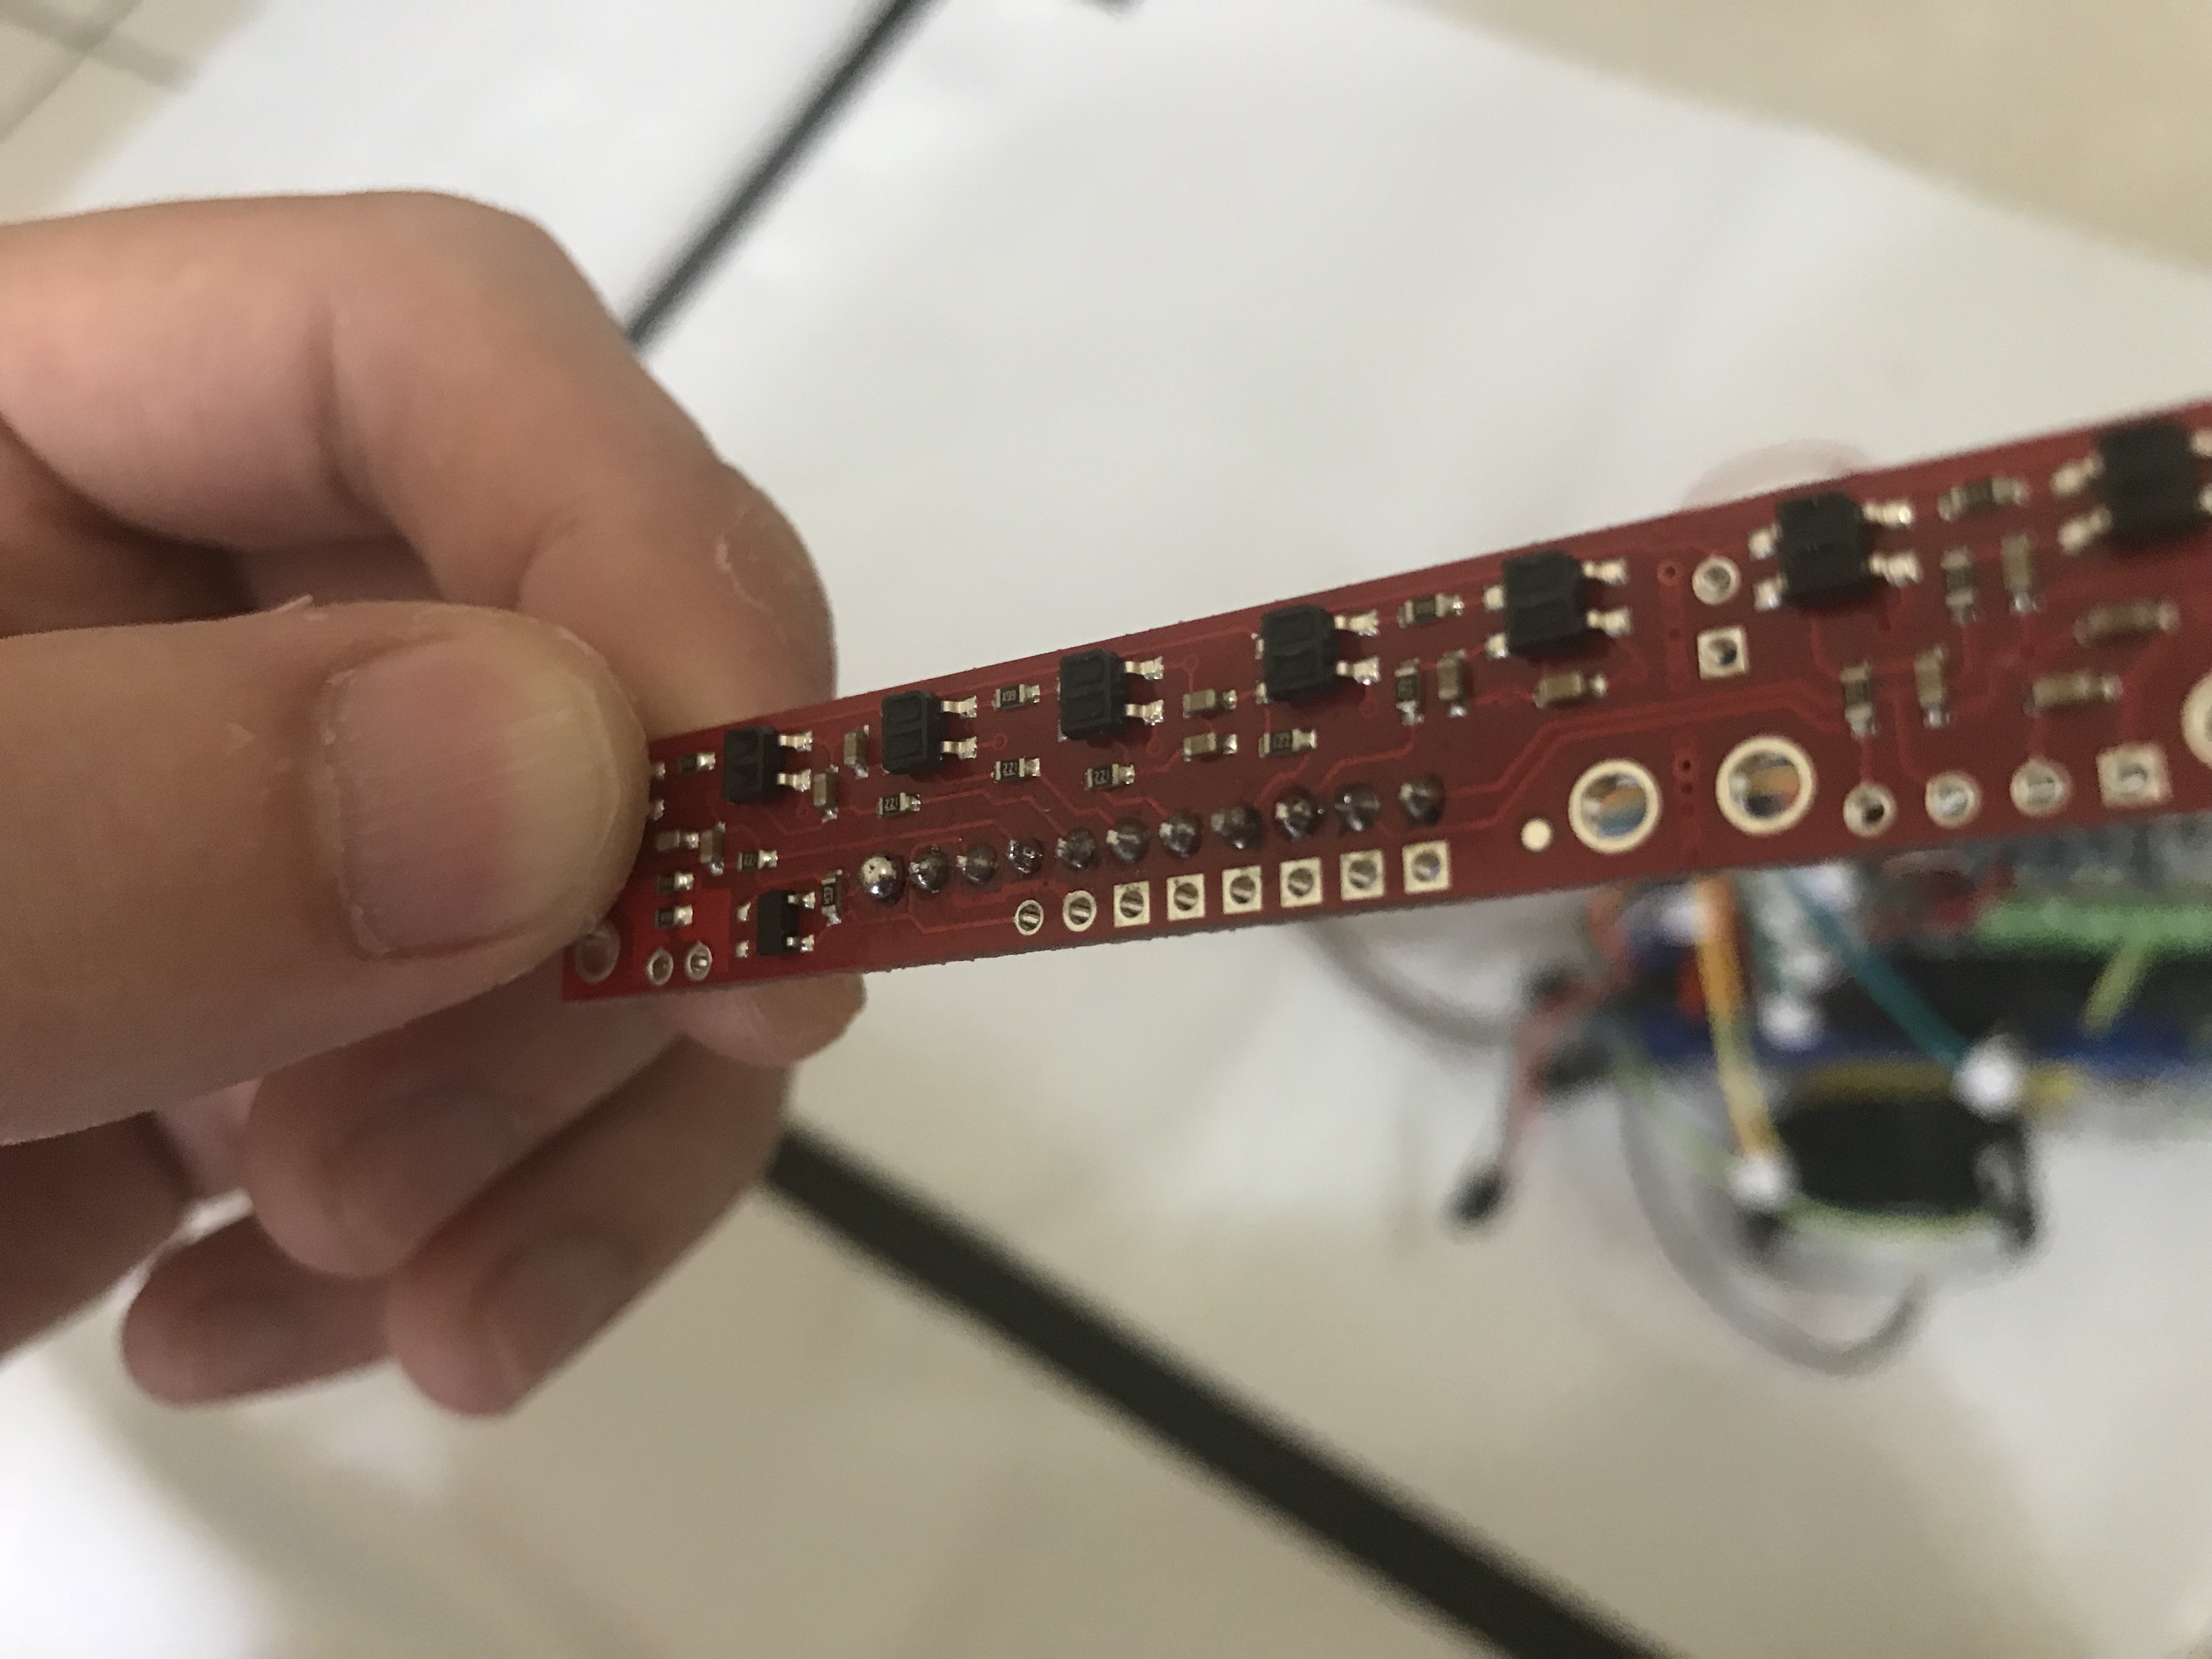 Ir sensor with unstable reading - Sensors - Arduino Forum